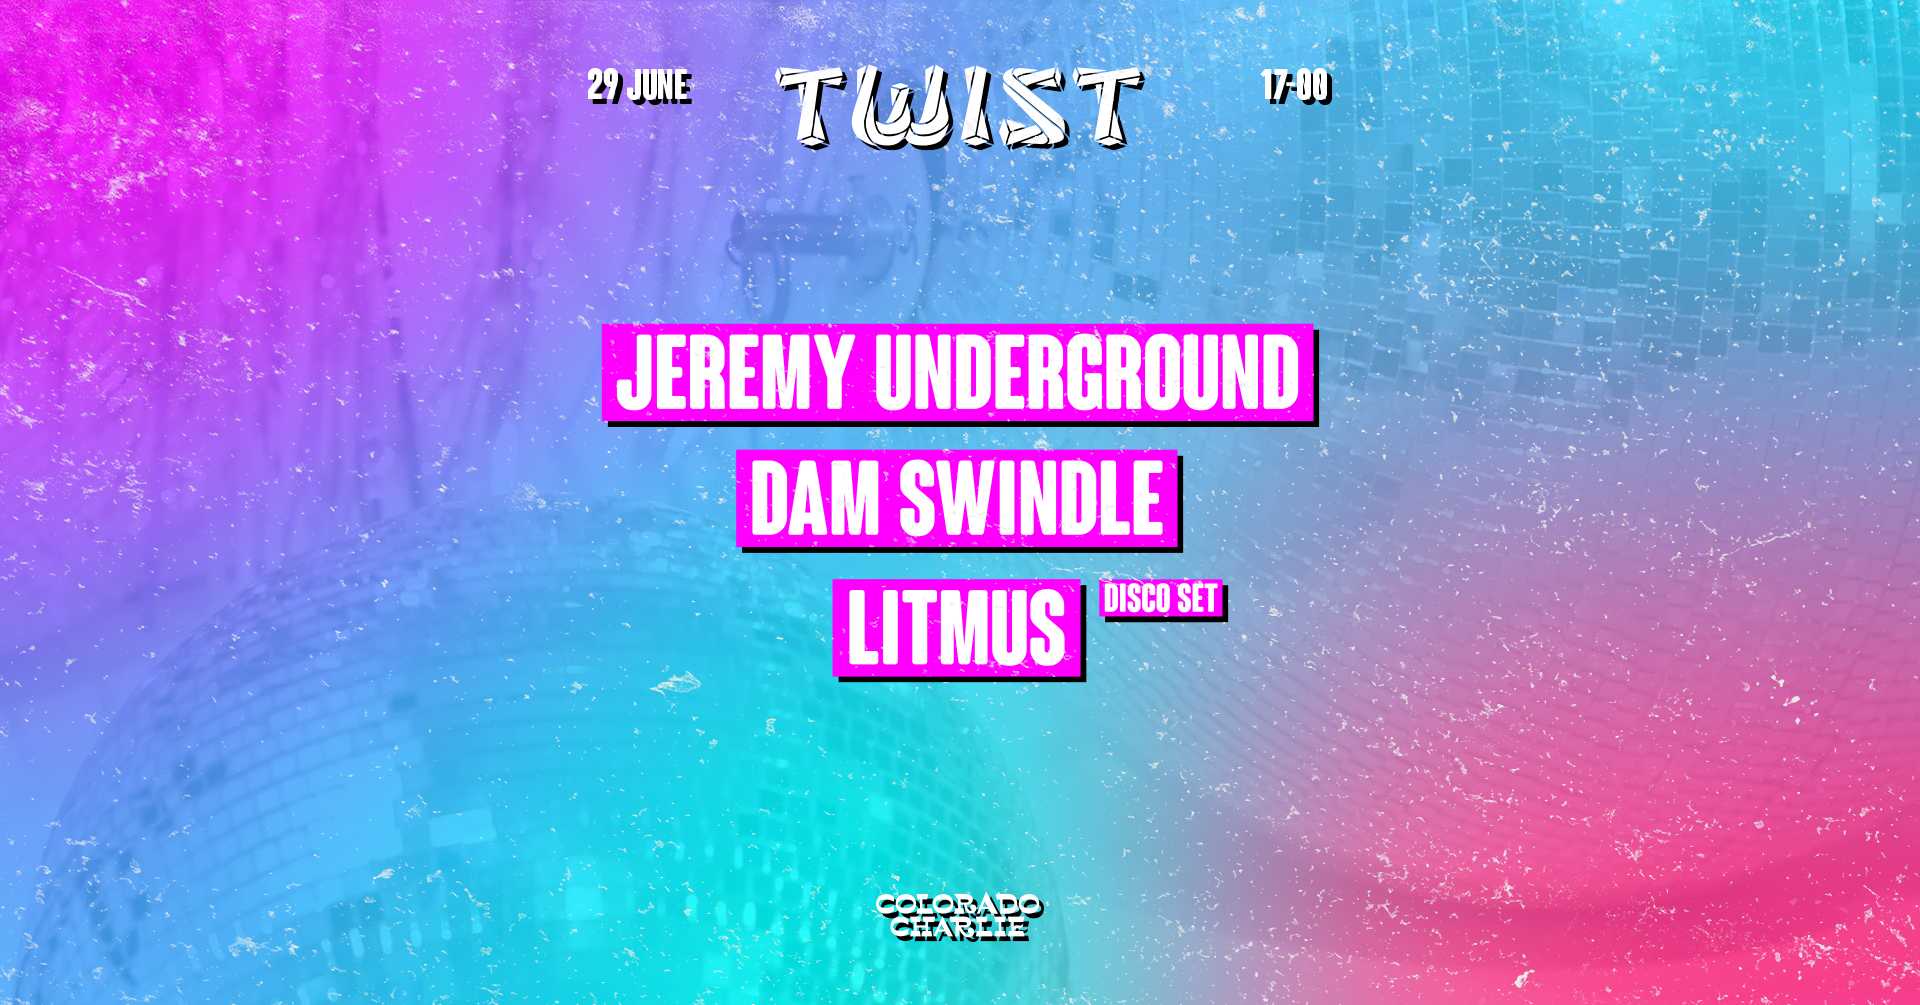 TWIST by Colorado Charlie with Jeremy Underground, Dam Swindle, Litmus (disco set) - フライヤー表